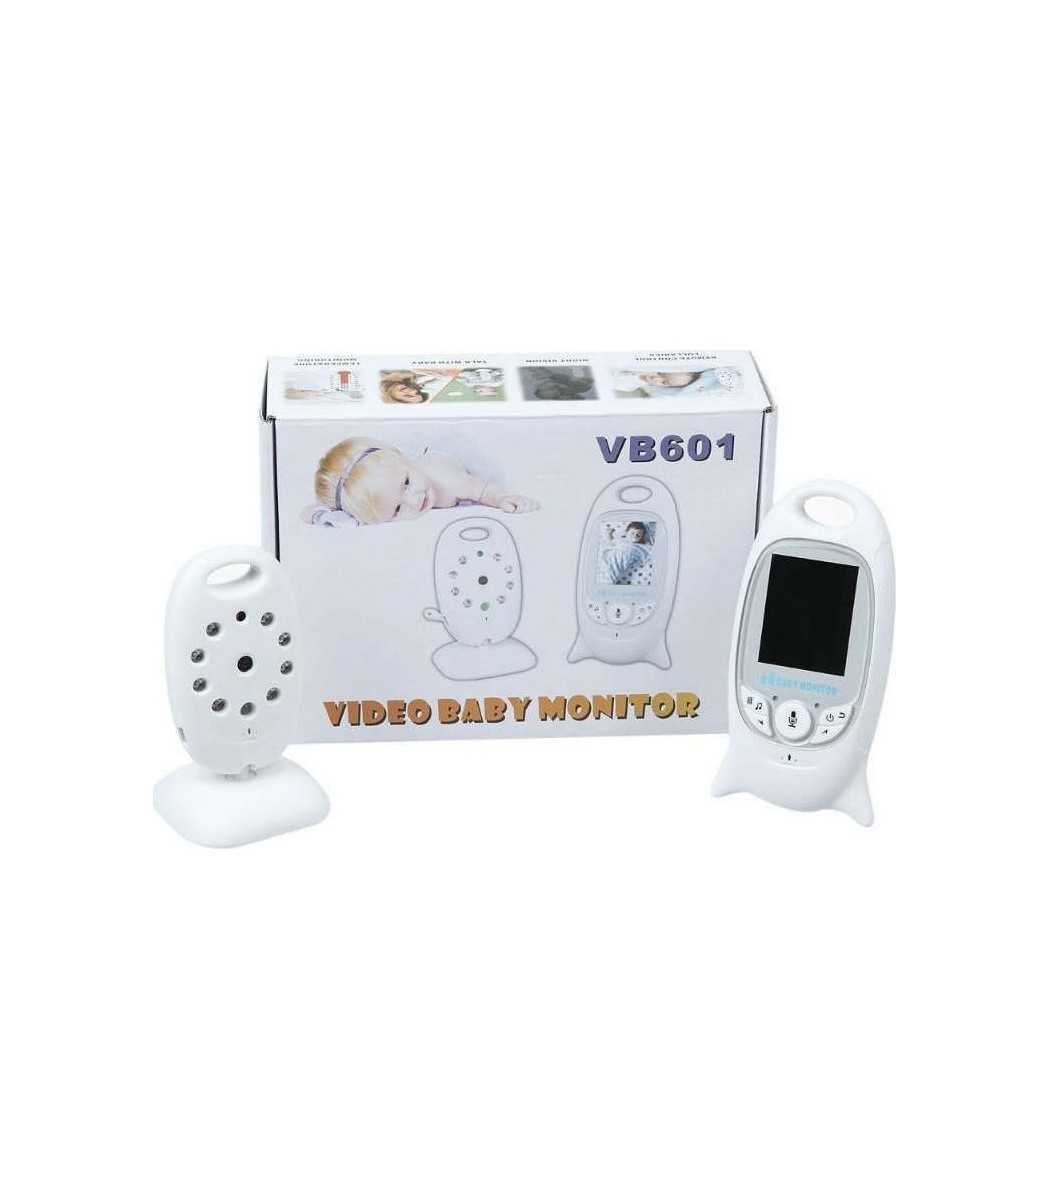 Baby Monitor Wireless LCD Babysitter Way Audio Night Vision Tempe...